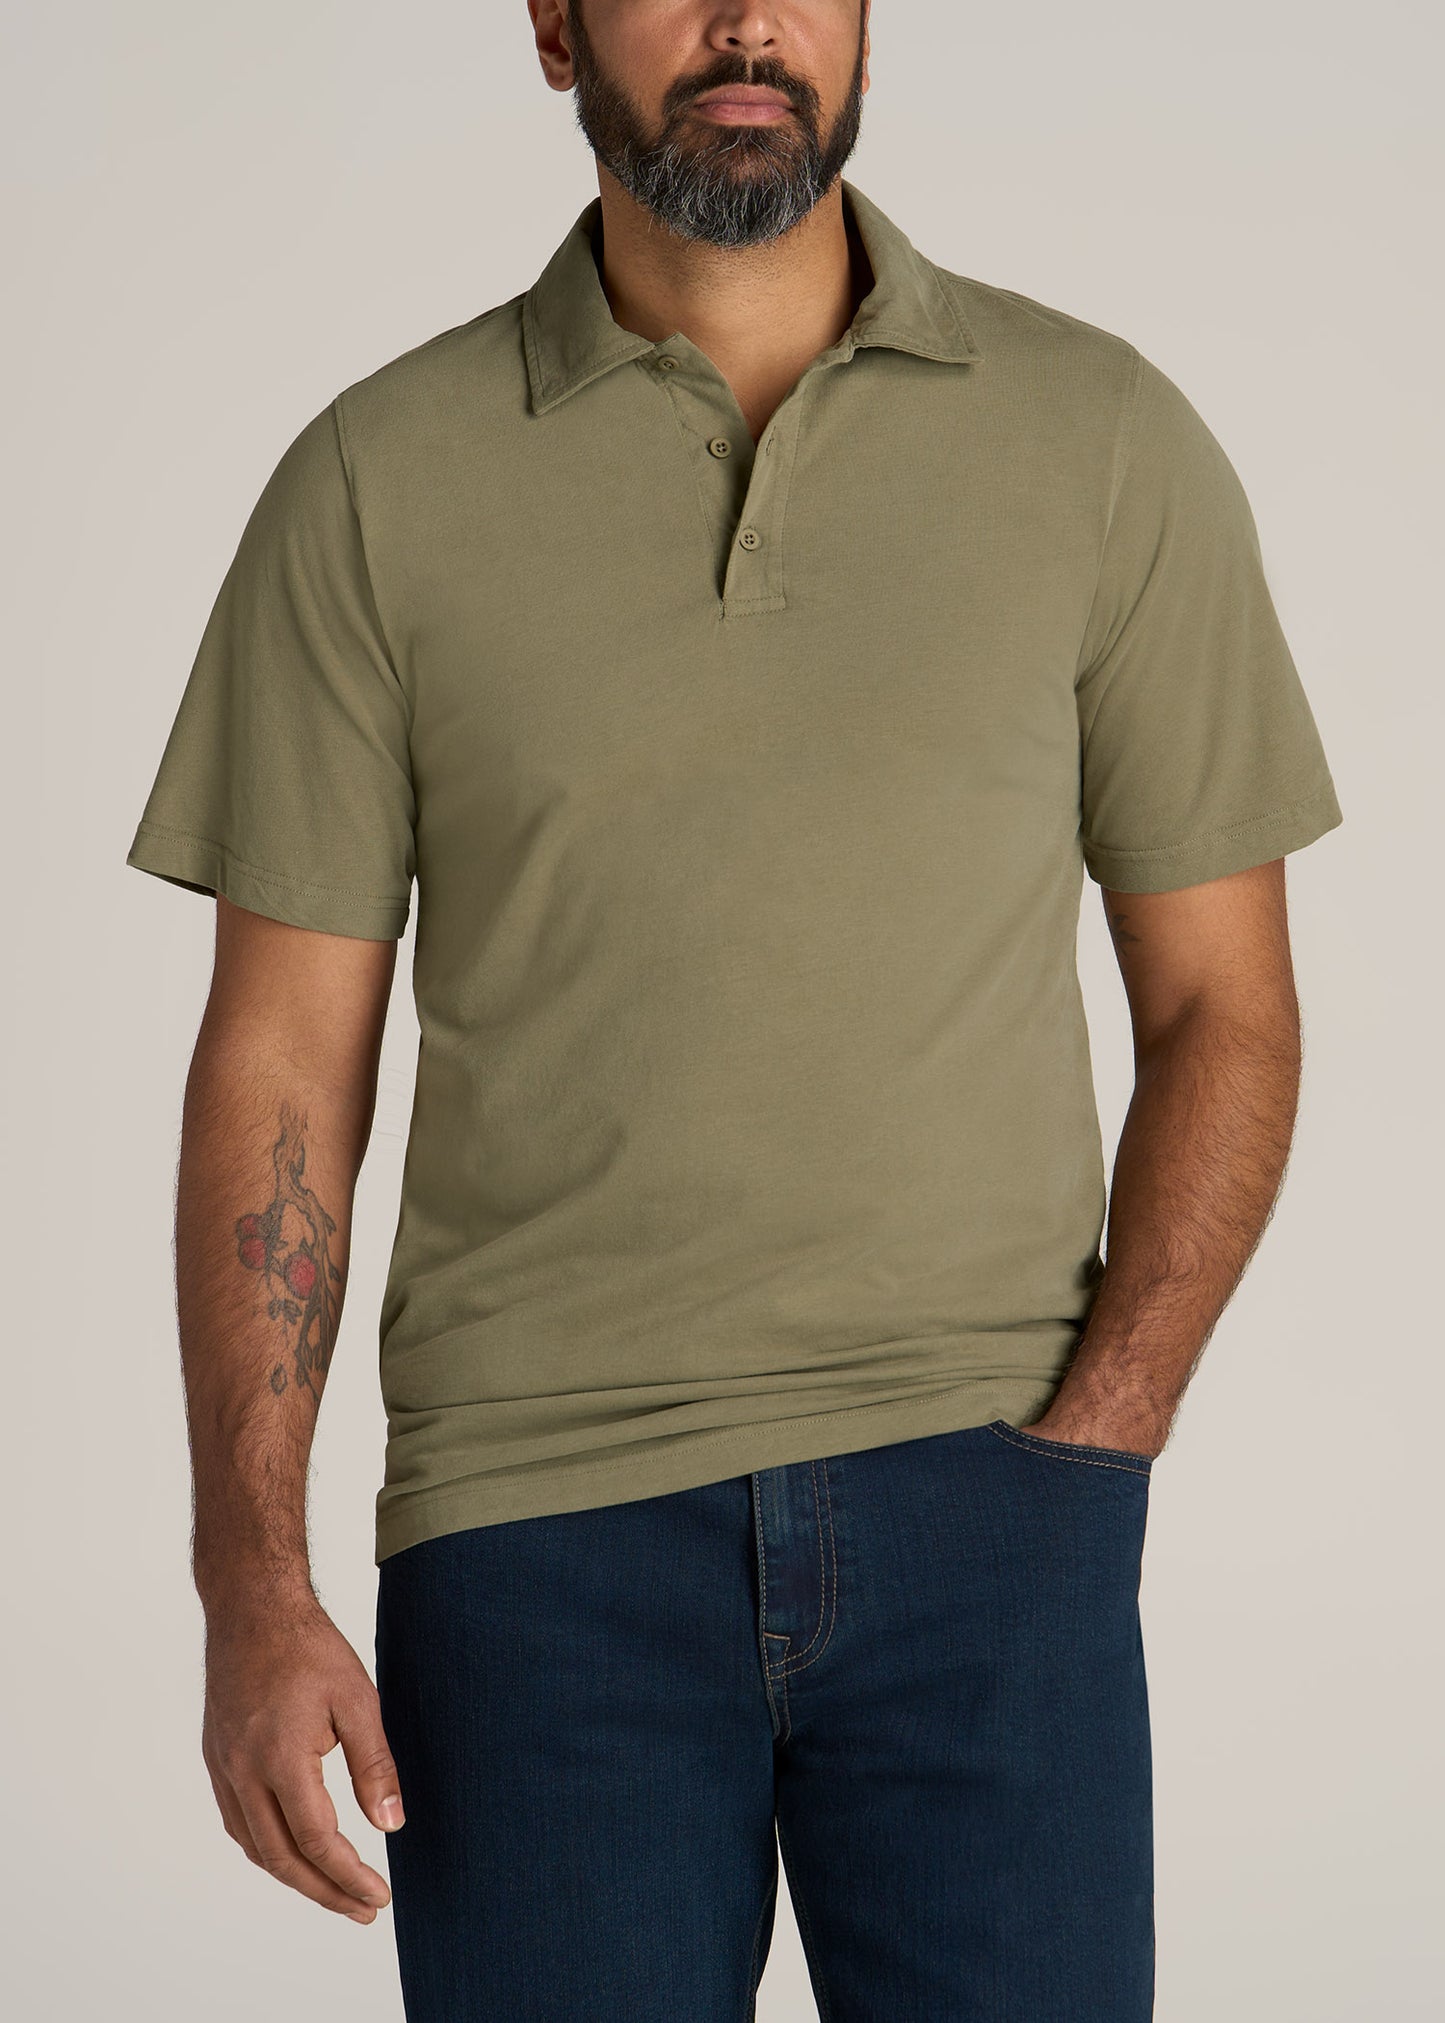 Soft Cotton Polo Shirt for Men